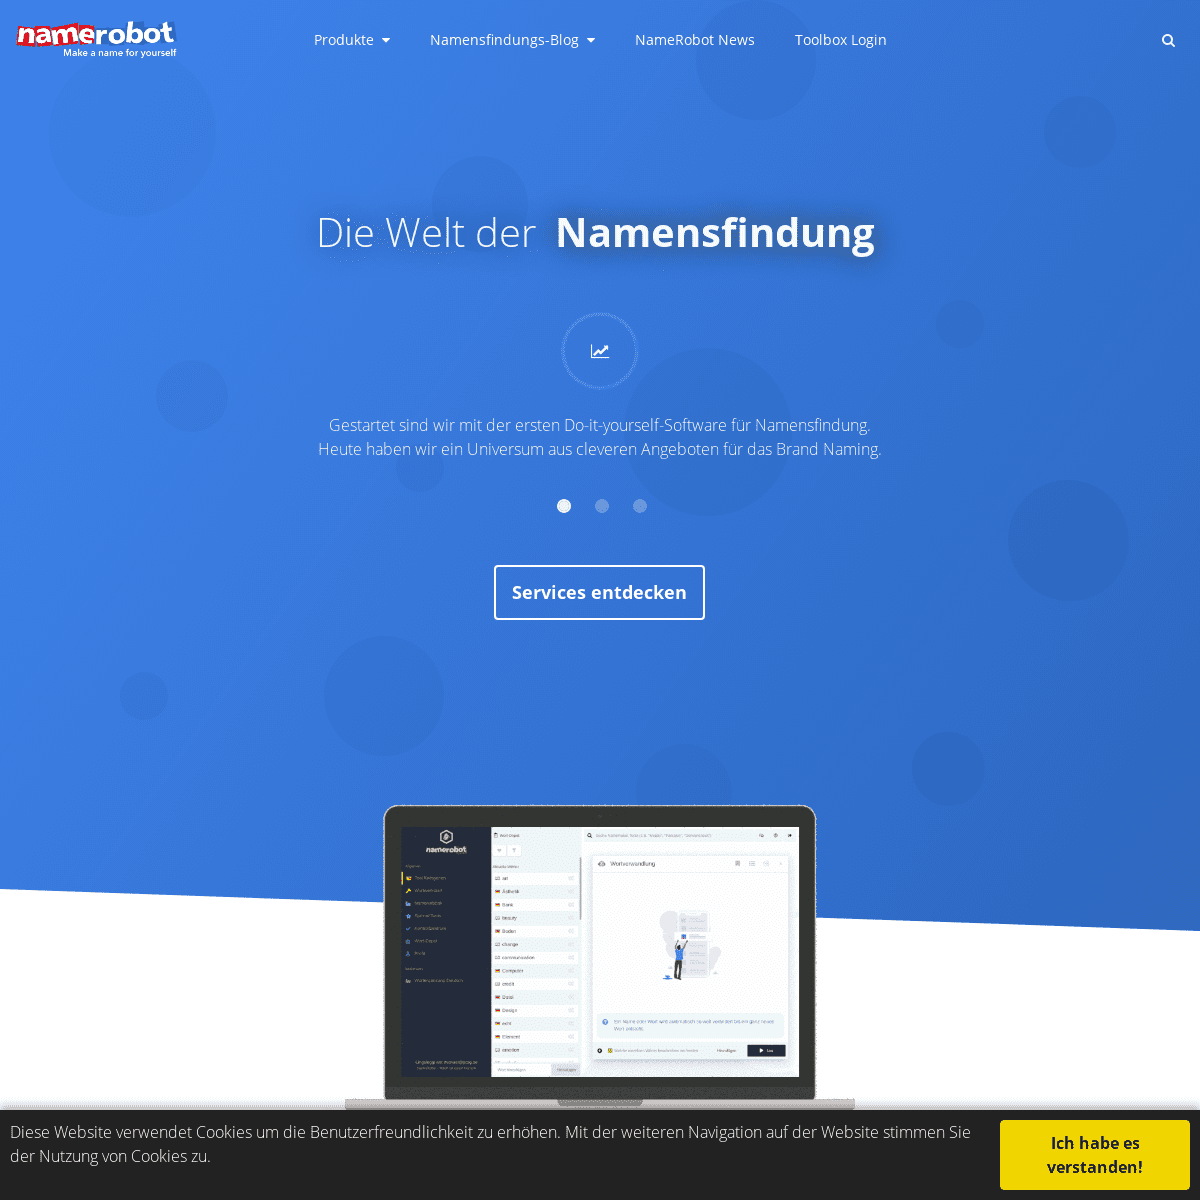 A complete backup of namerobot.de